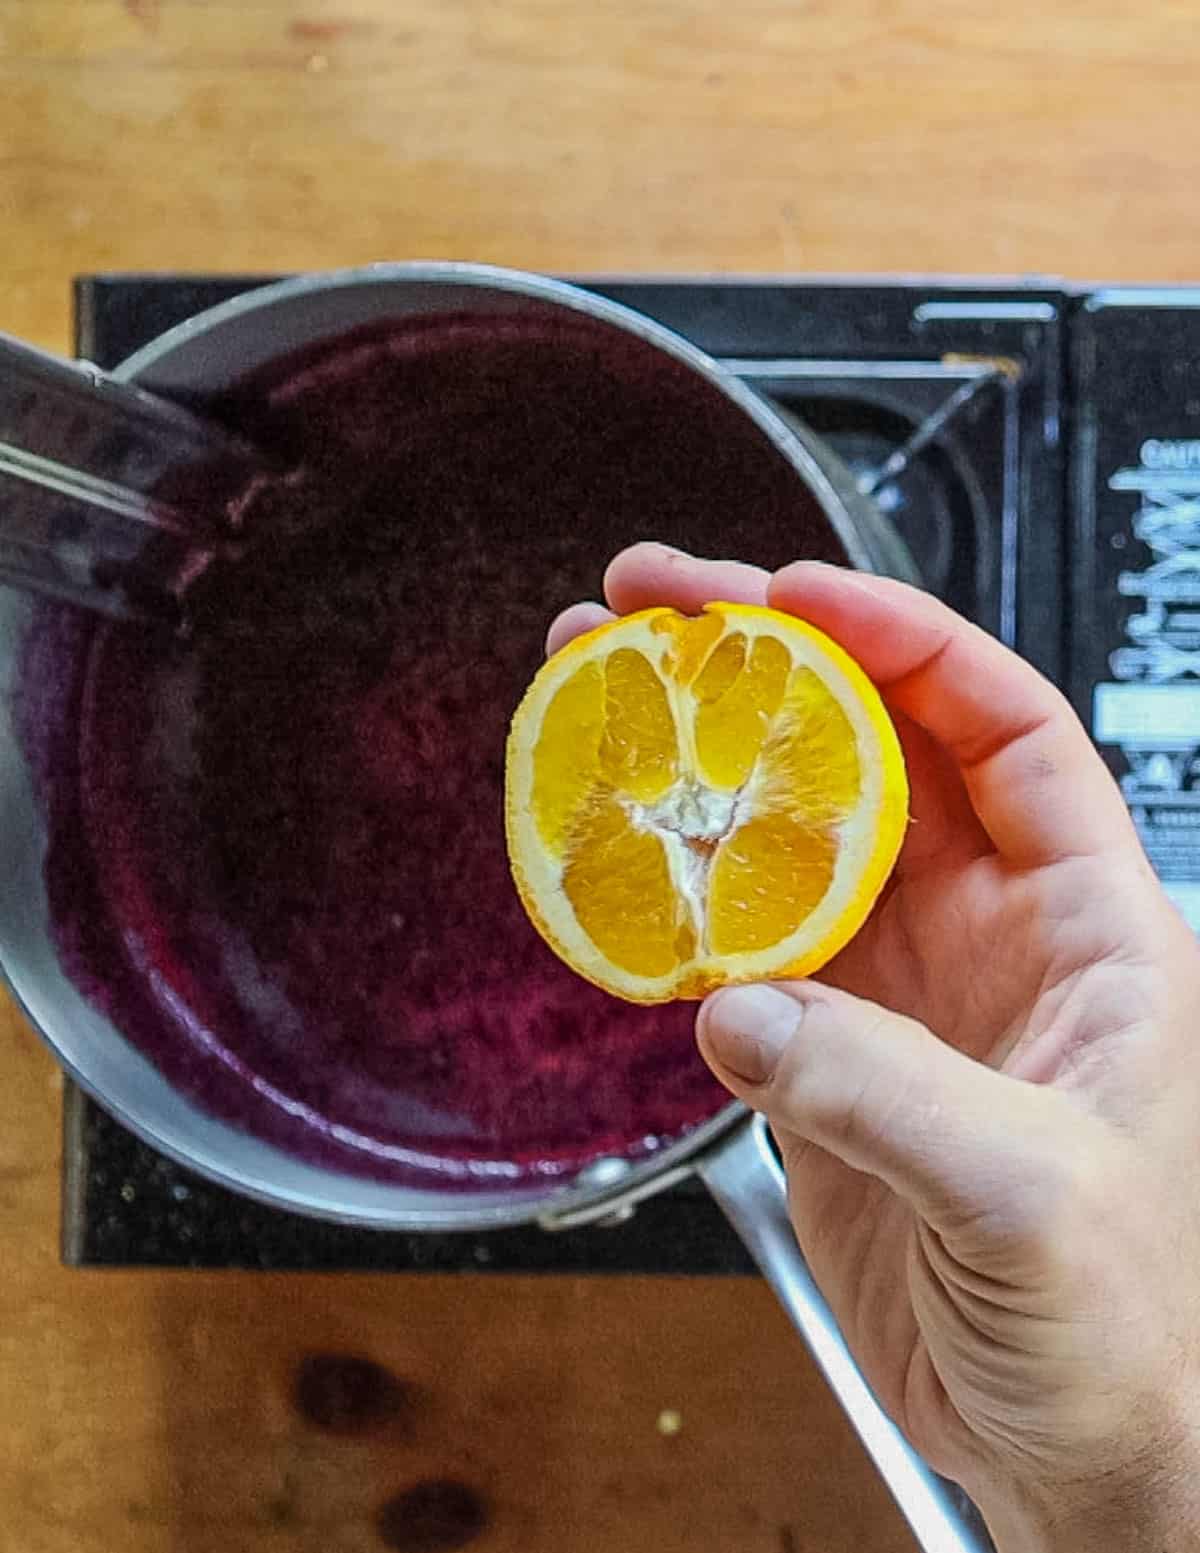 Adding orange juice to aronia juice. 